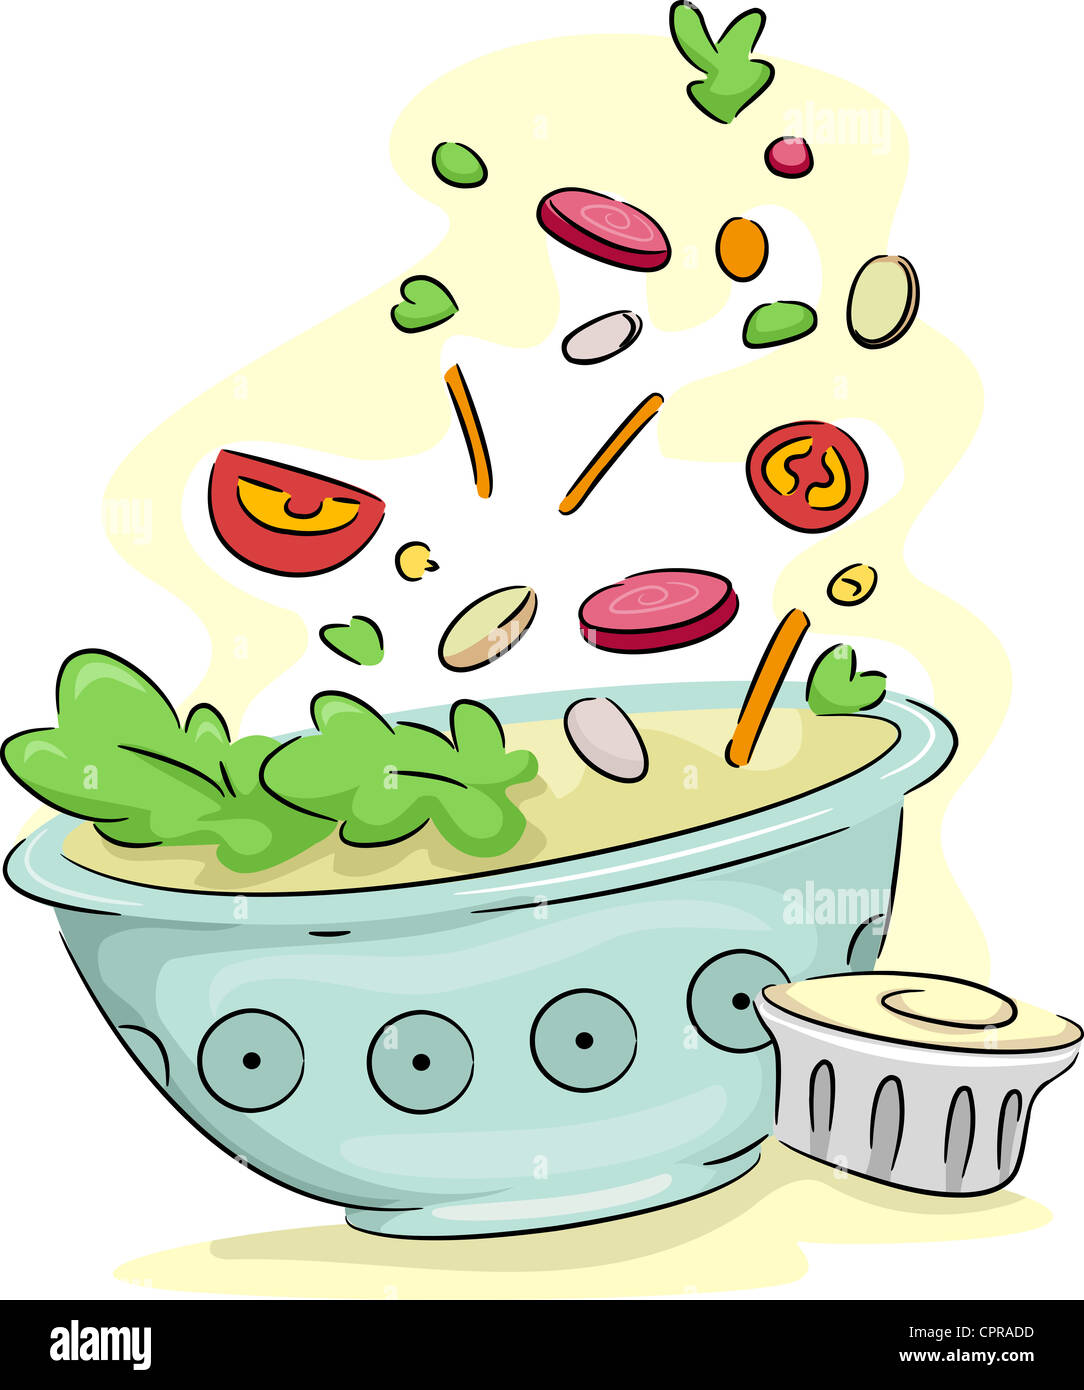 Green salad of fresh vegetables in a transparent salad bowl object